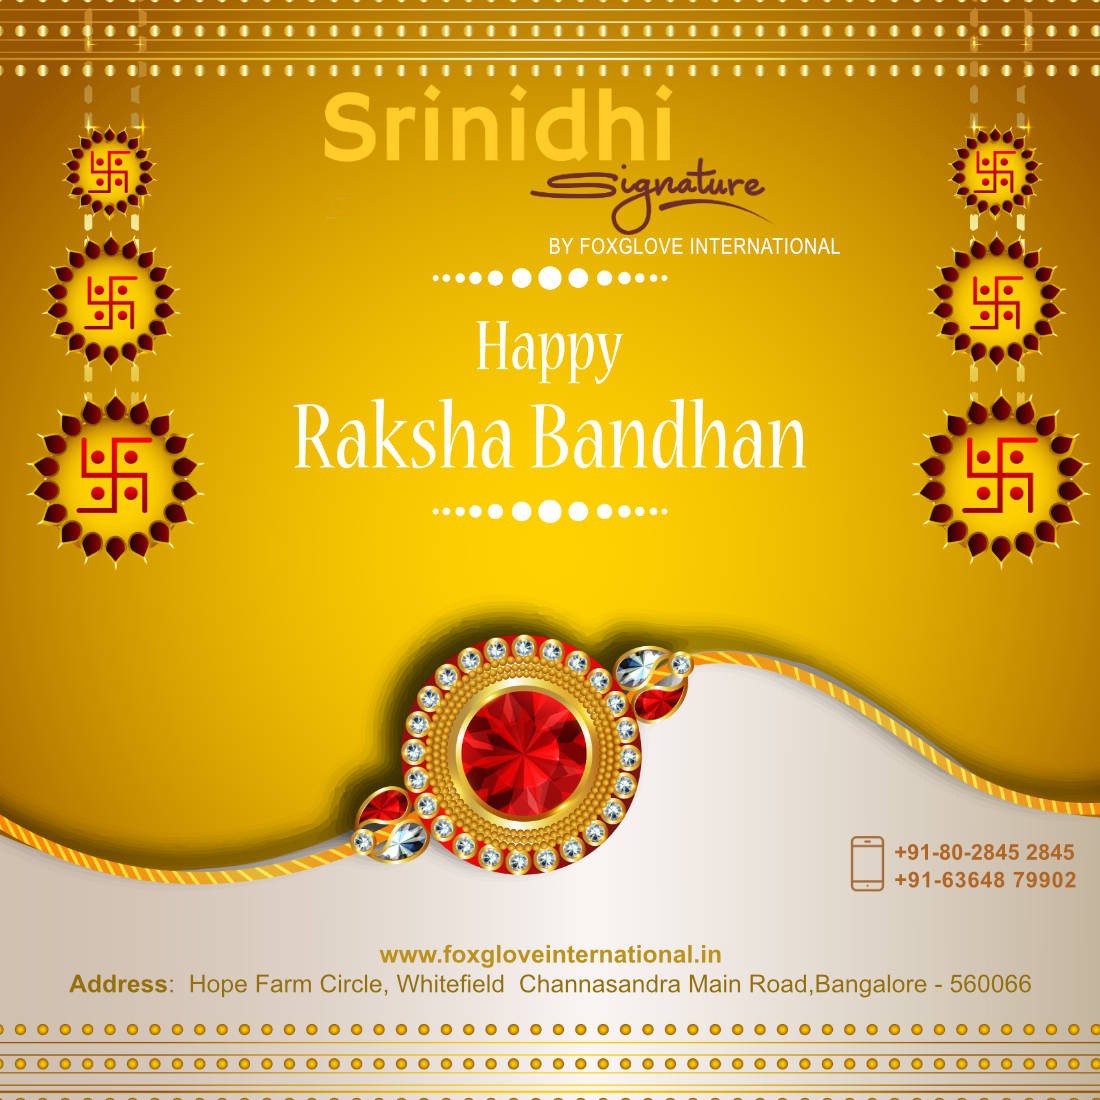 Social Media for Indian Festivals - Raksha Bandhan Rakhi Image 6